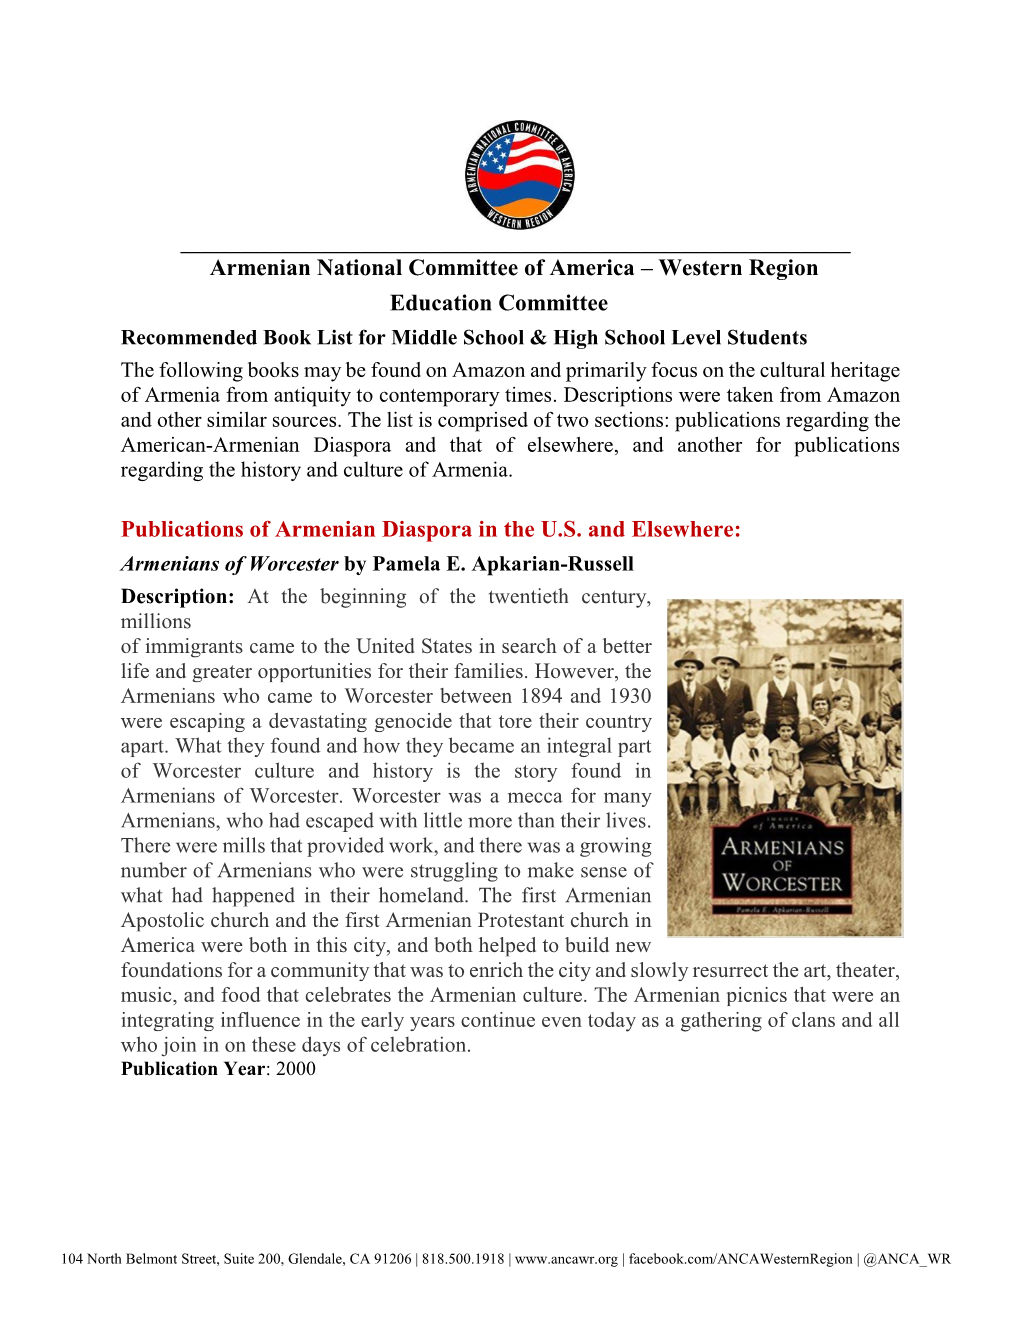 Western Region Education Committee Publications of Armenian Diaspora